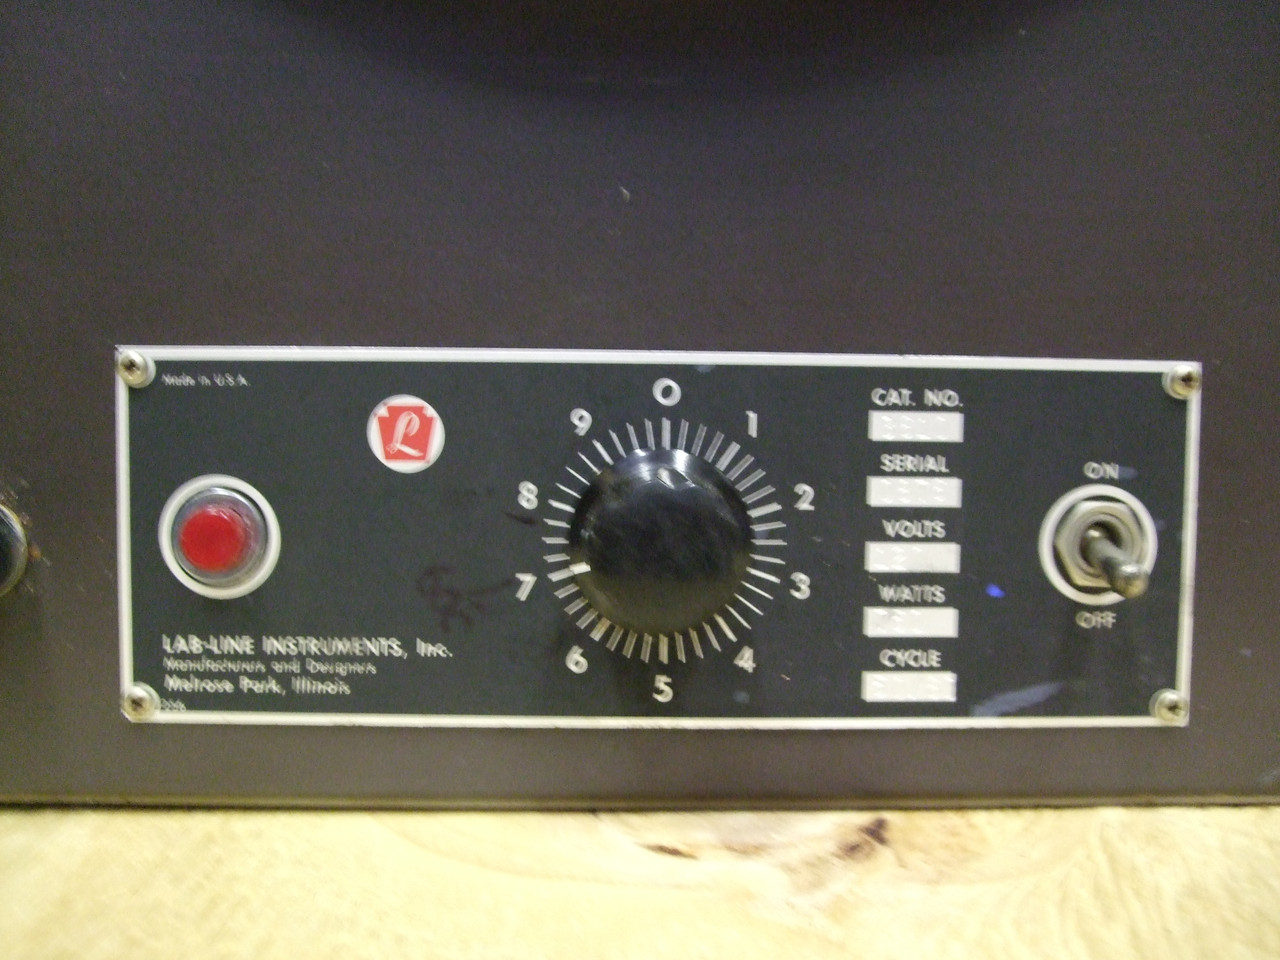 Lab-Line Instruments Inc. 3610 Laboratory Oven